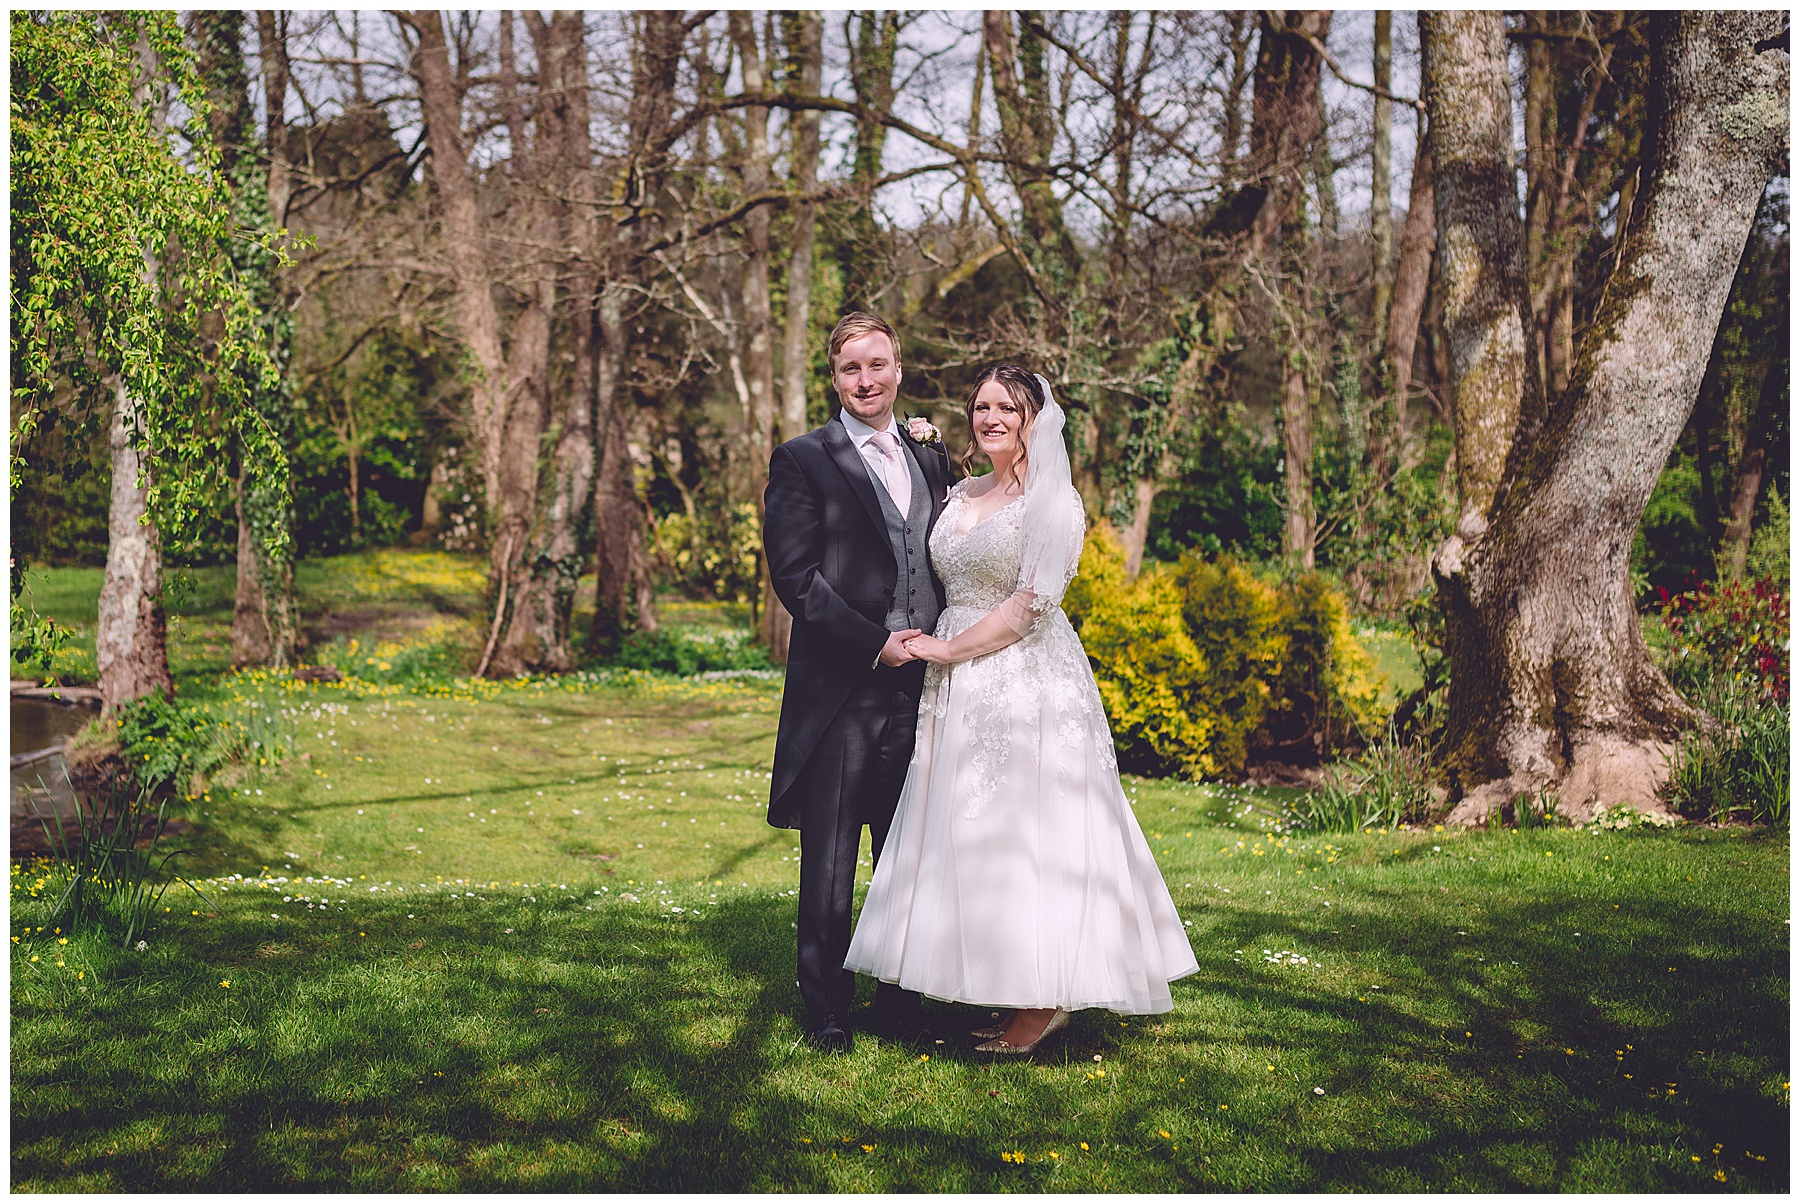 Wedding Photos at Pencoed House Cardiff